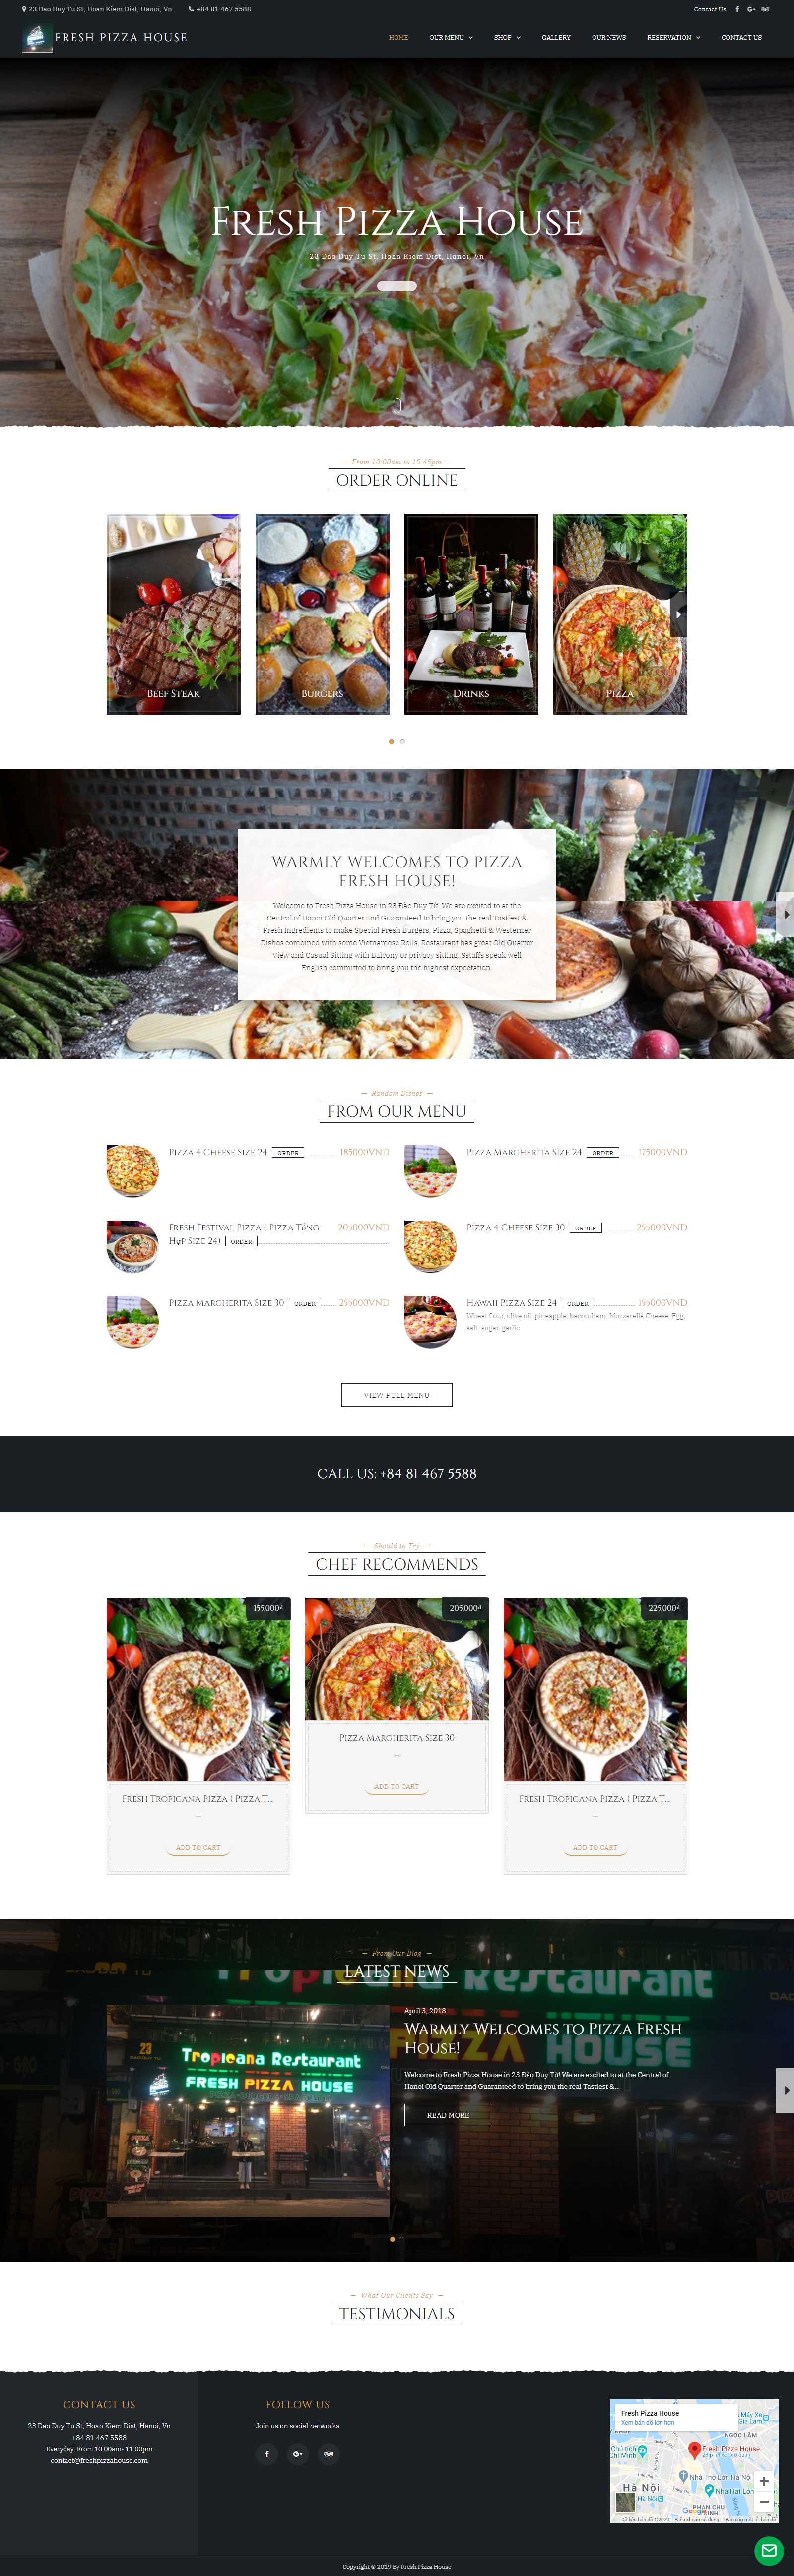 Thiết kế Website bánh pizza - freshpizzahouse.com